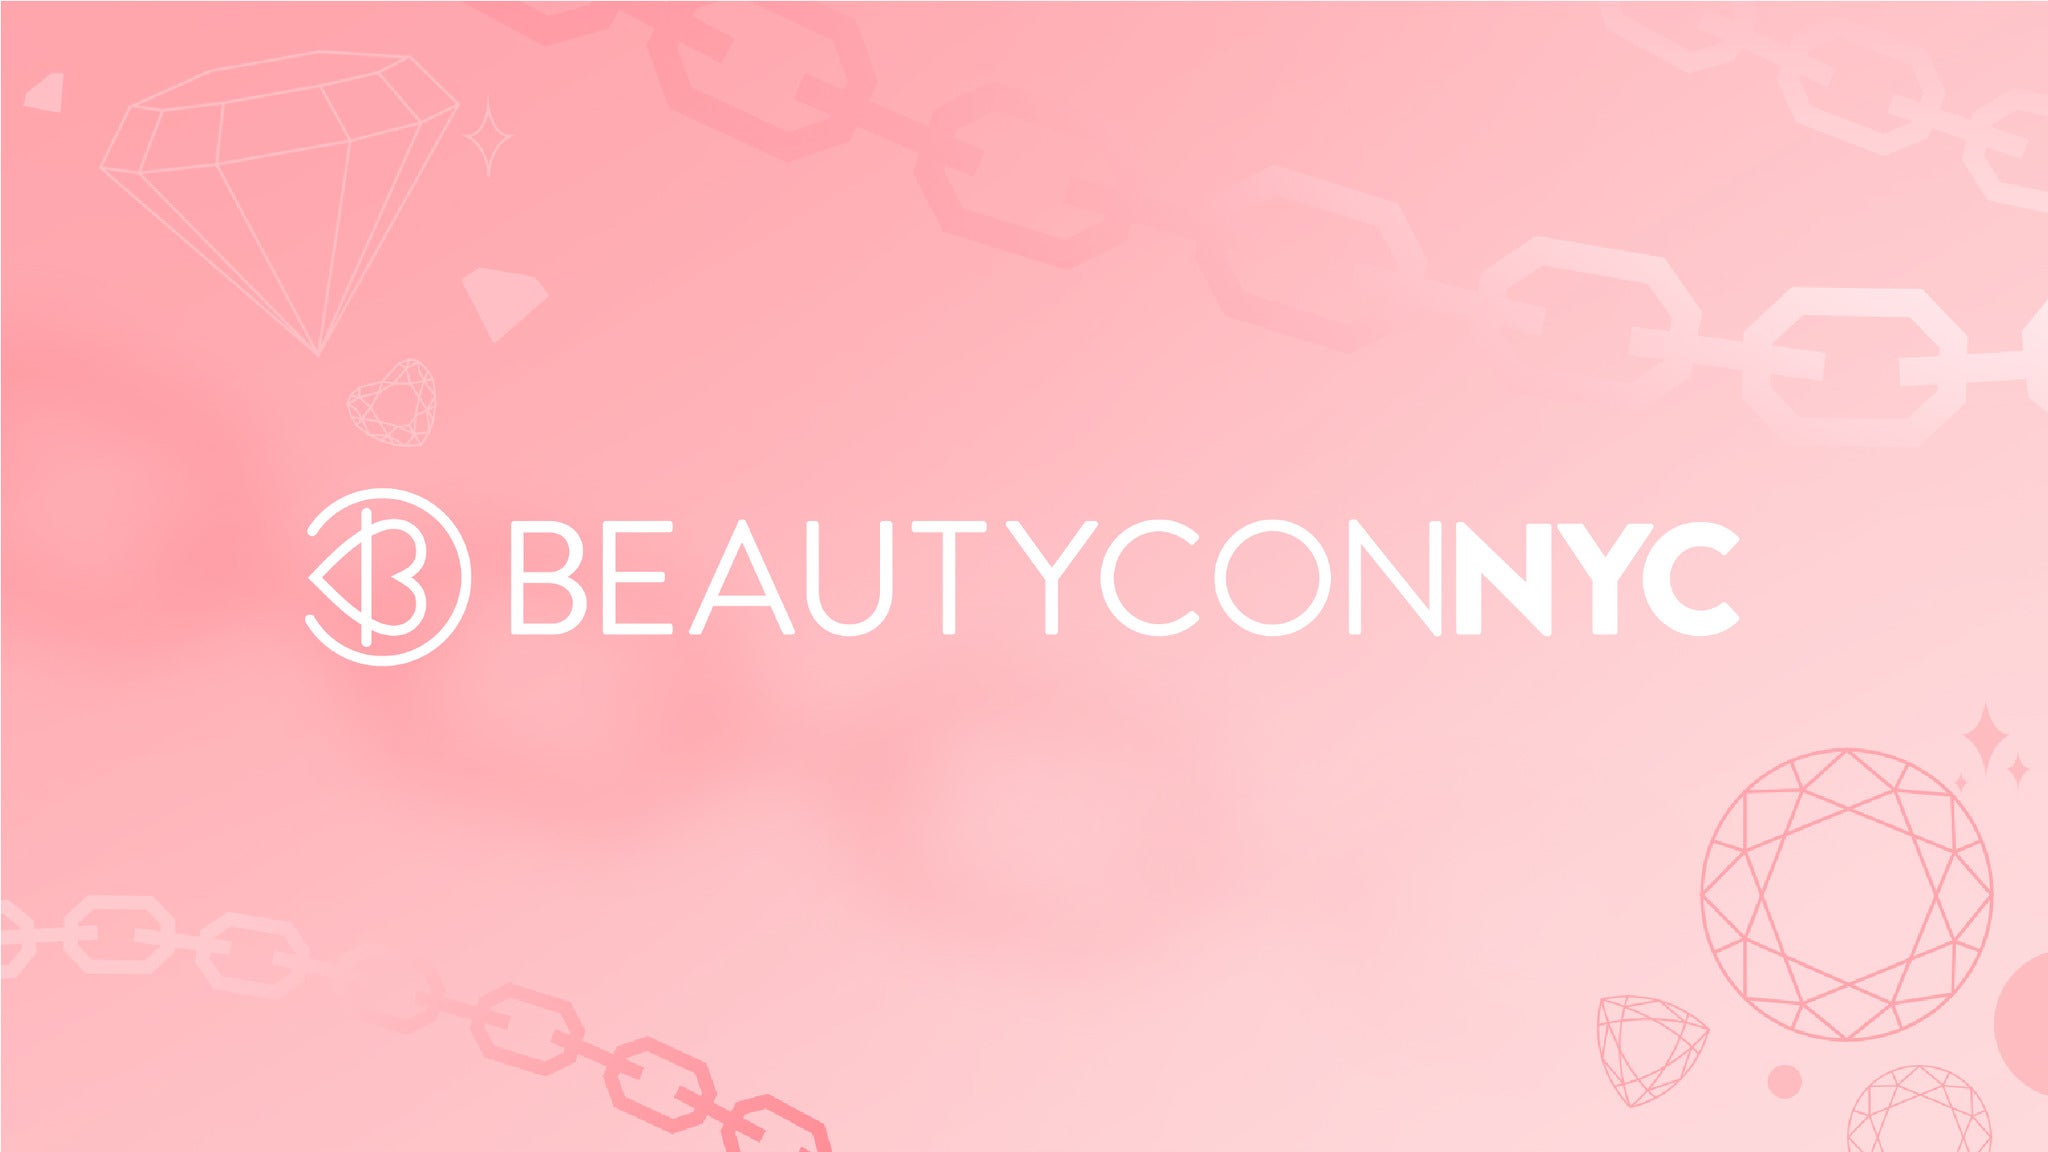 Beautycon NYC presale information on freepresalepasswords.com